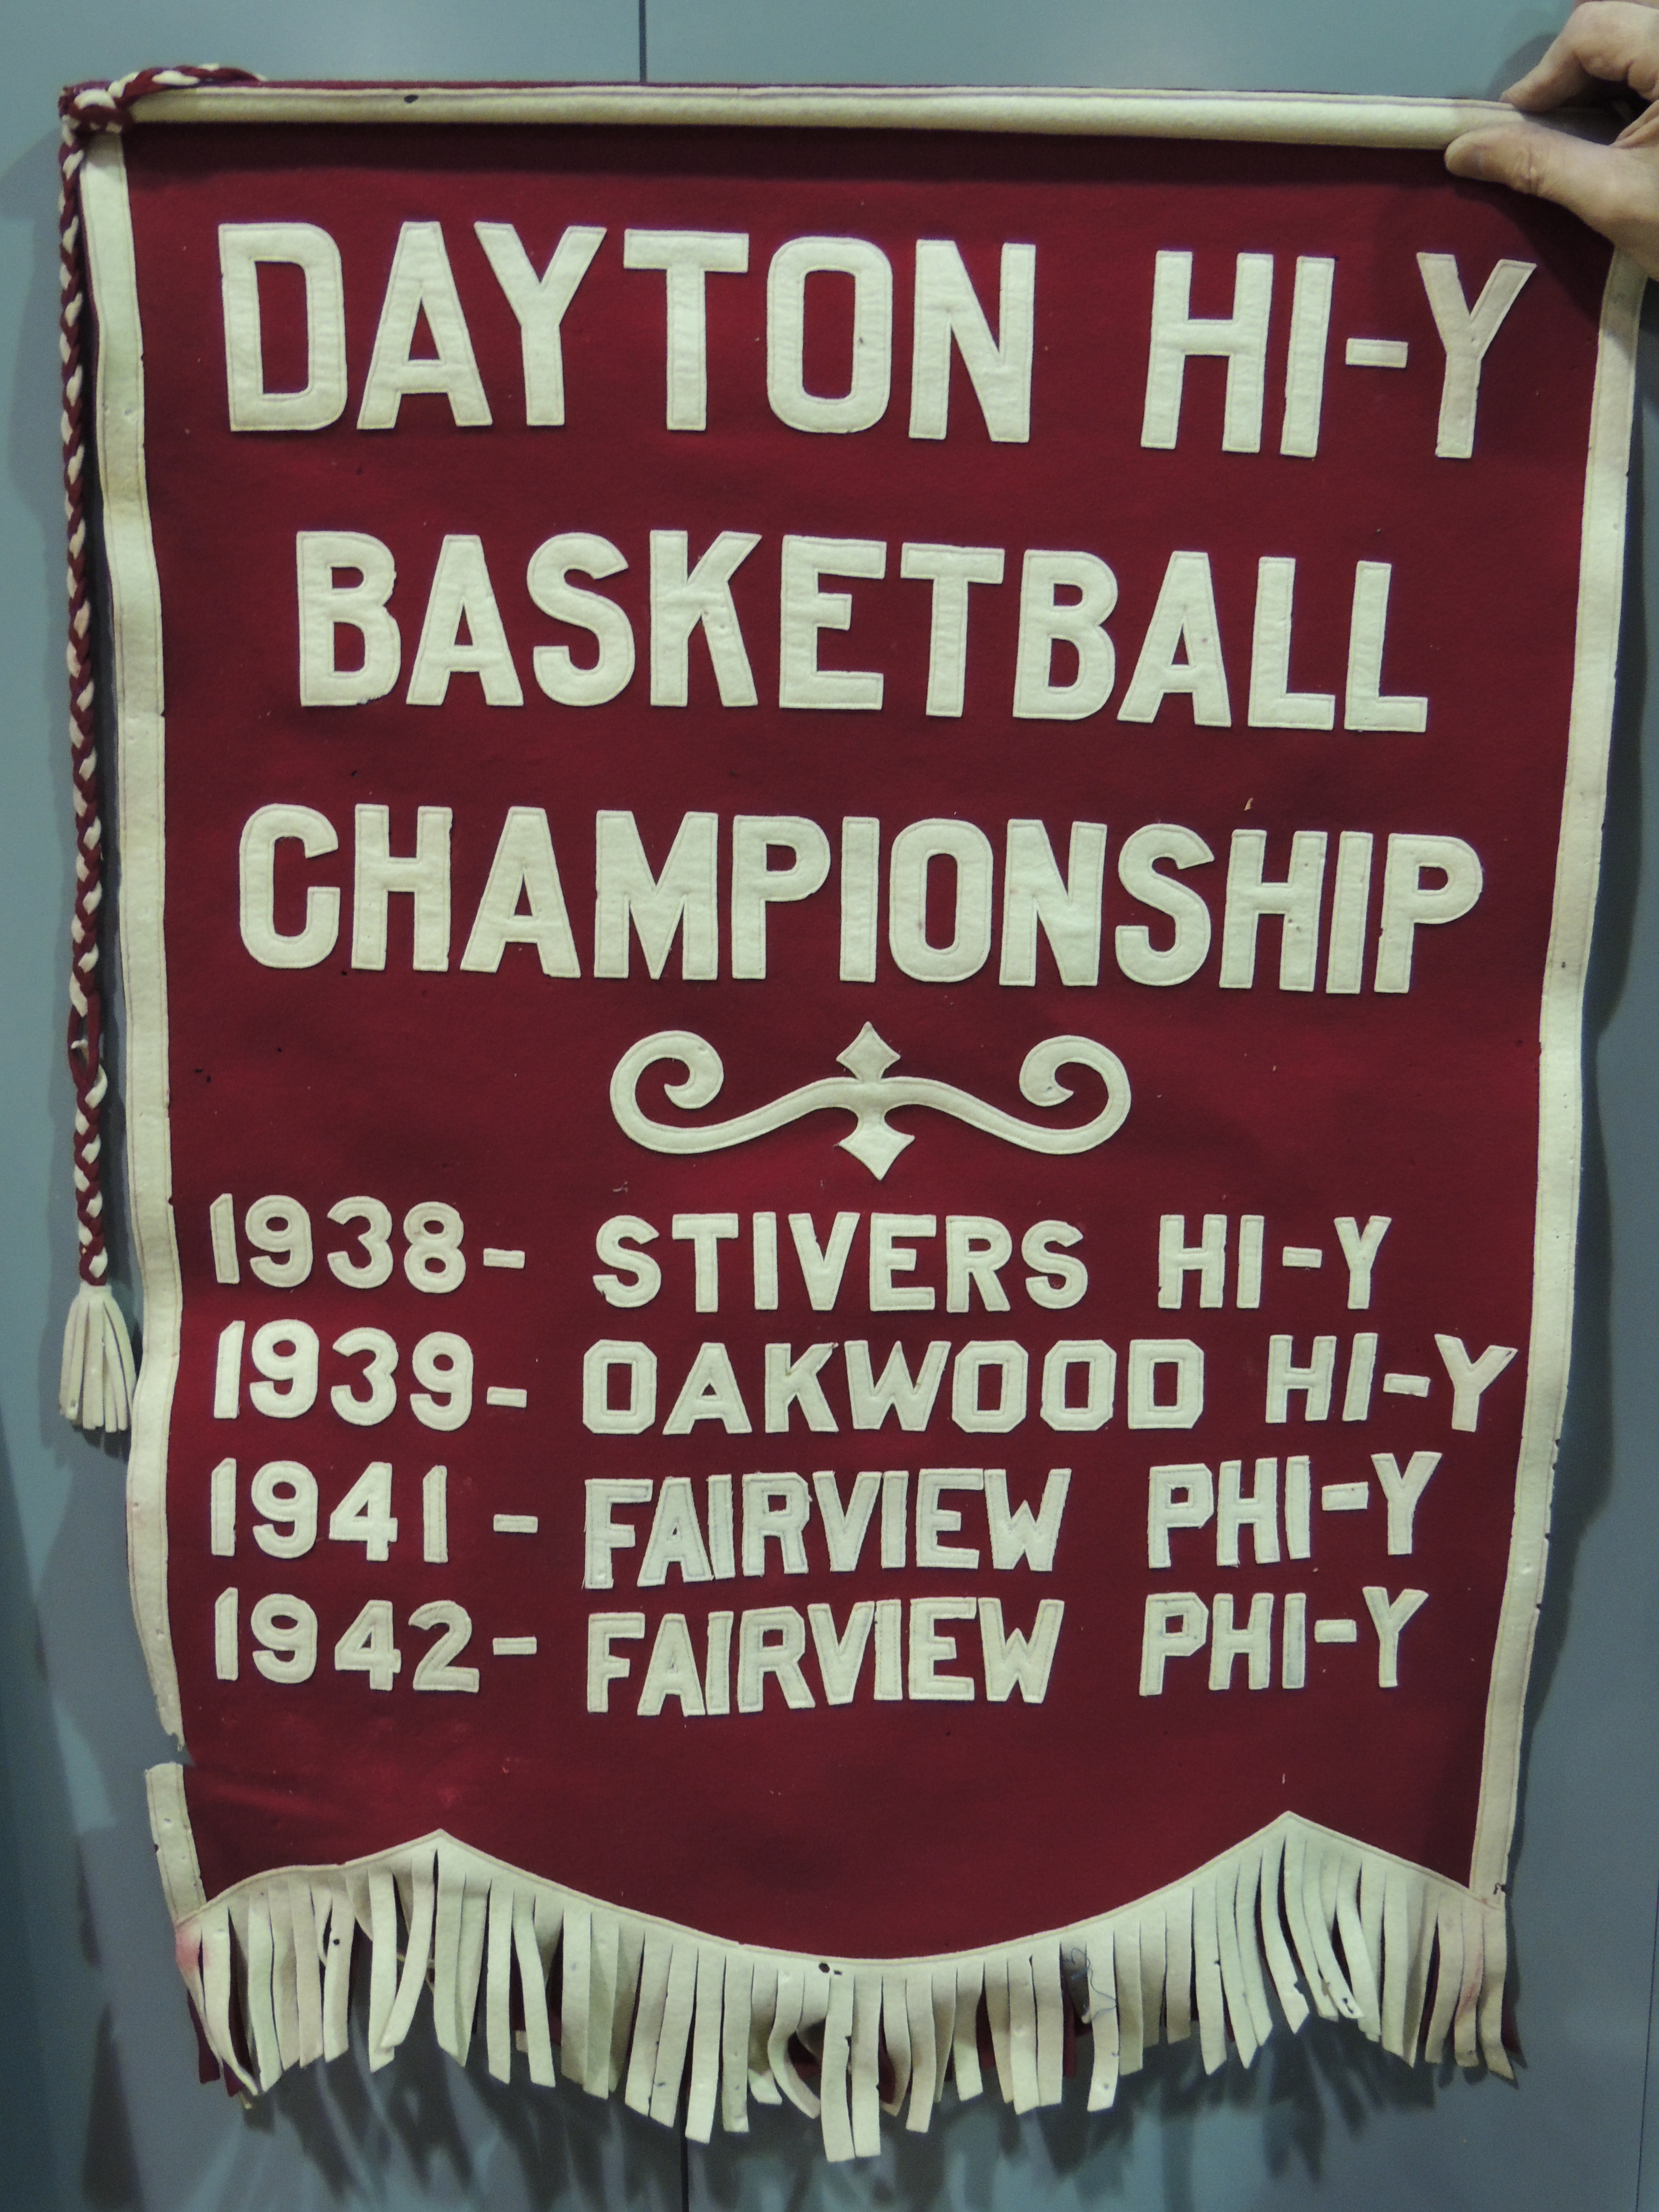 Dayton HI-Y Banner. Photo Dennis Huddleston, Class of 1965.